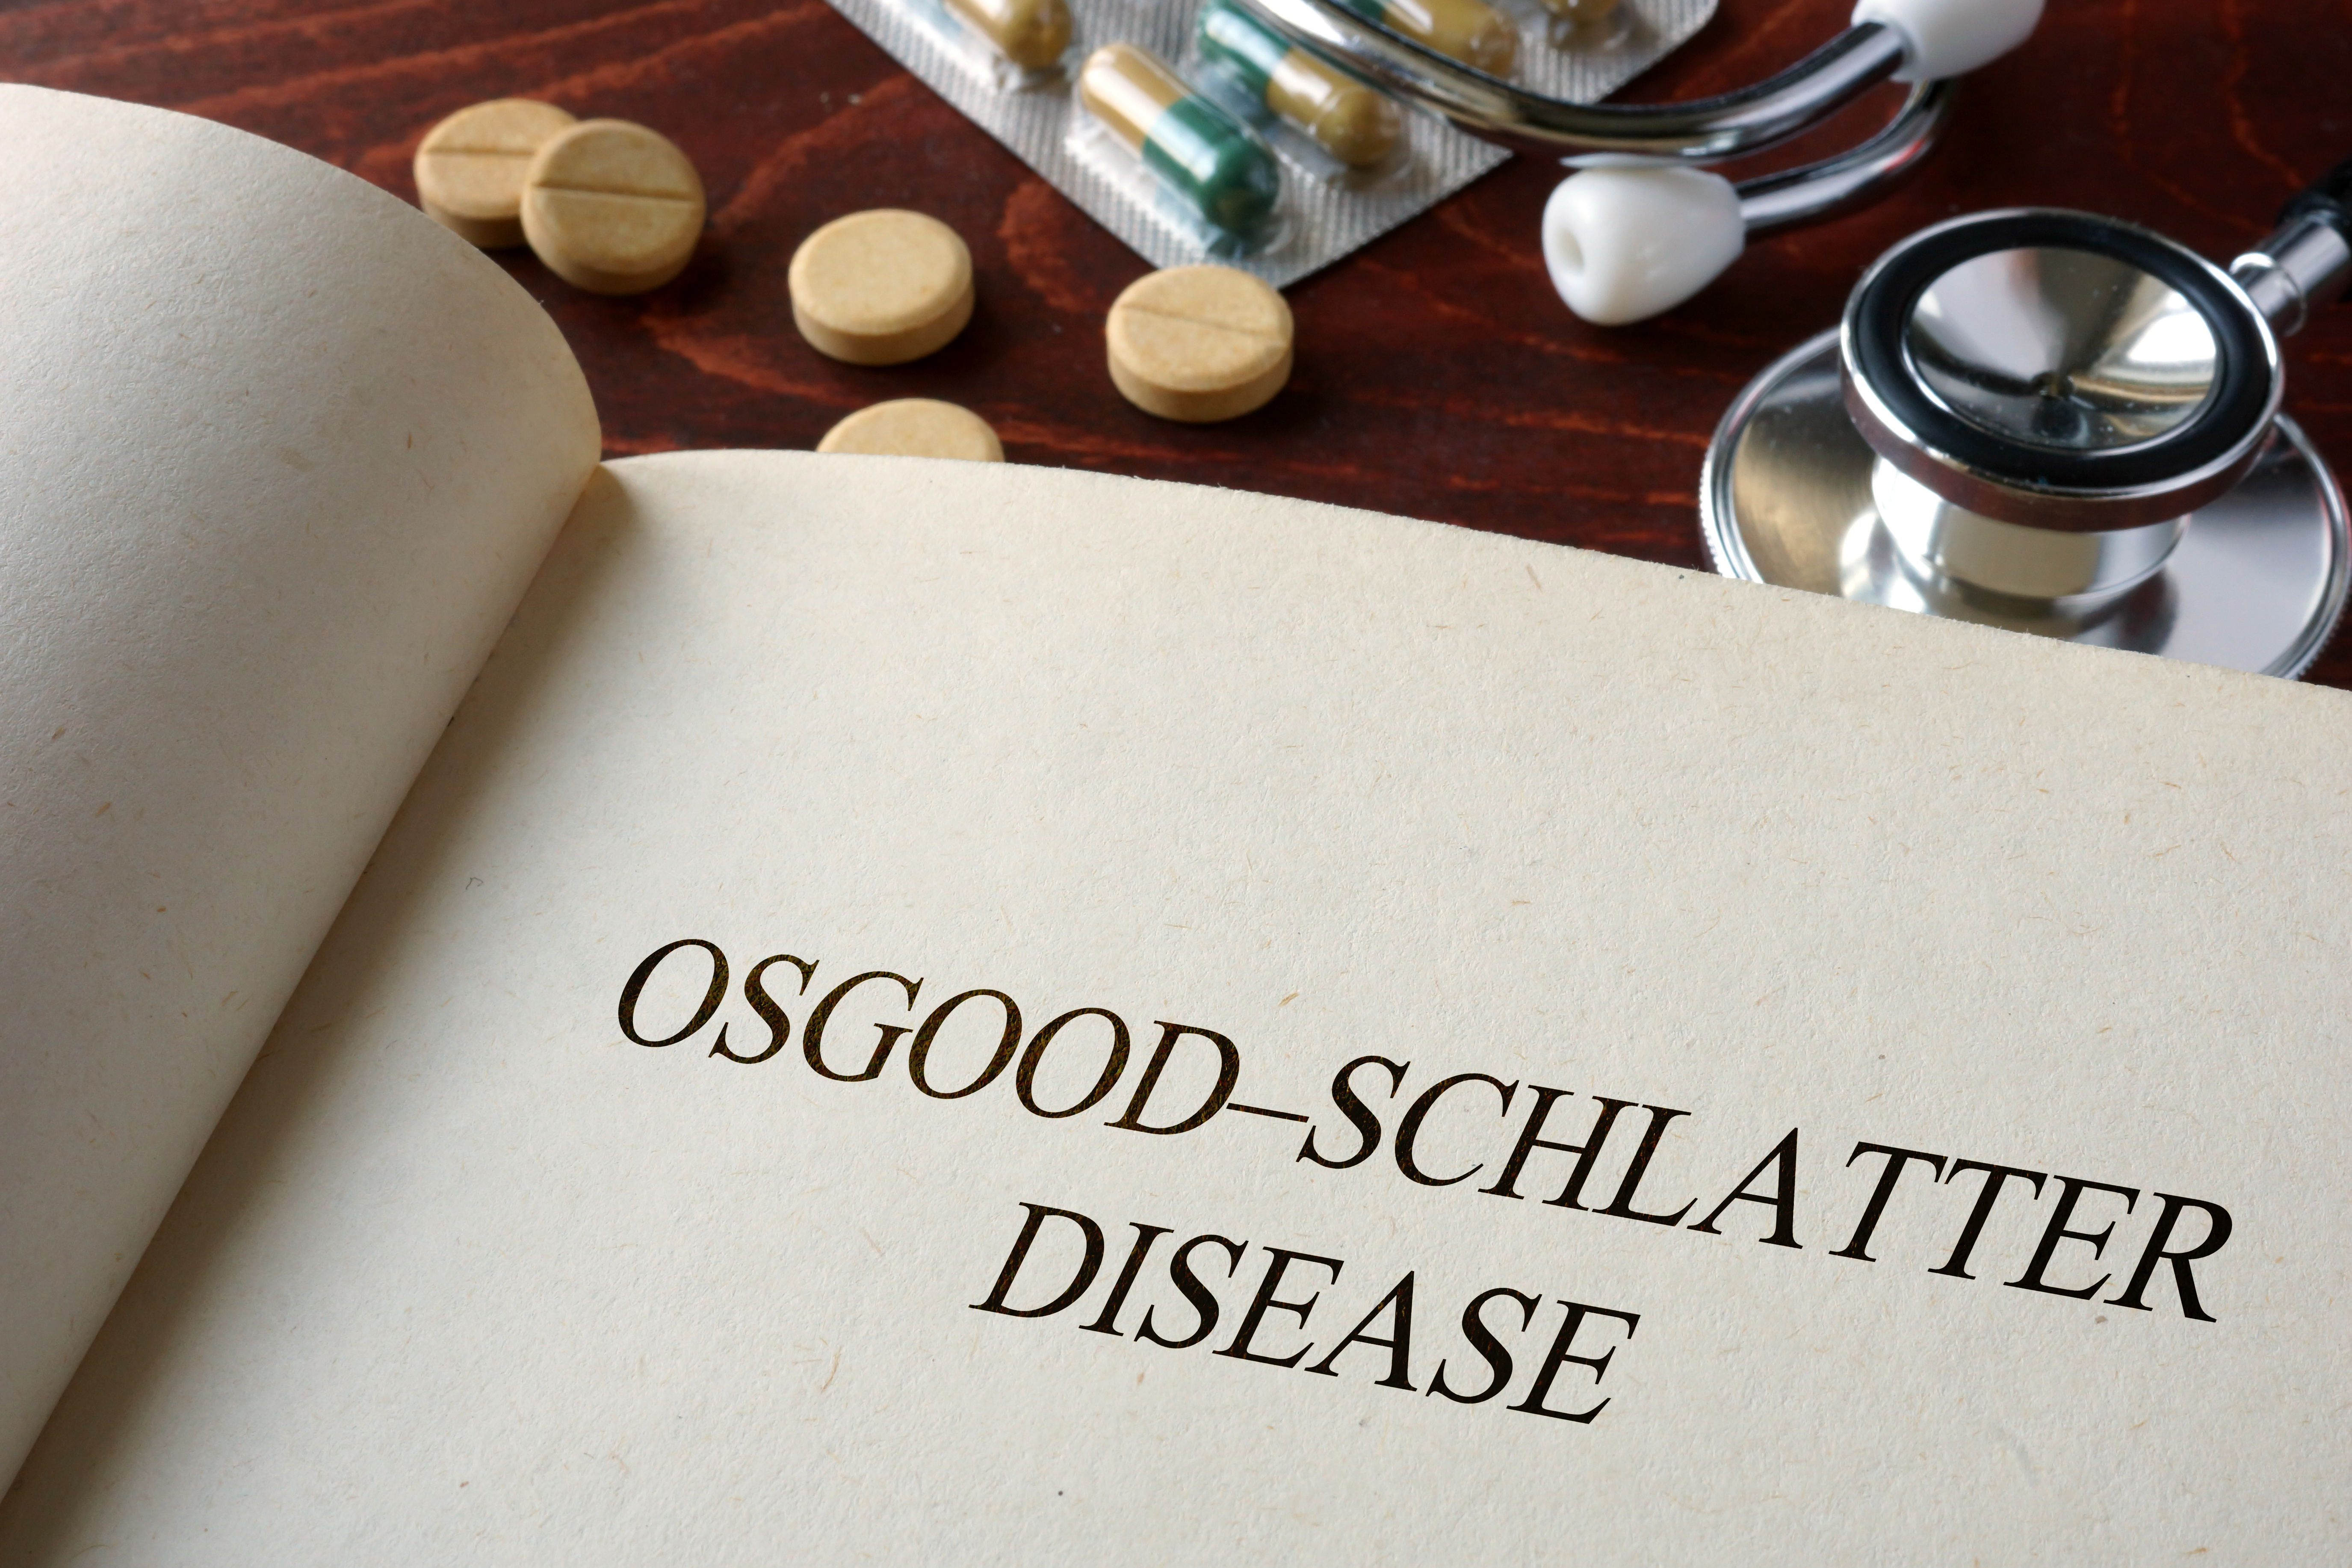 What is Osgood- Schlatter Disease?